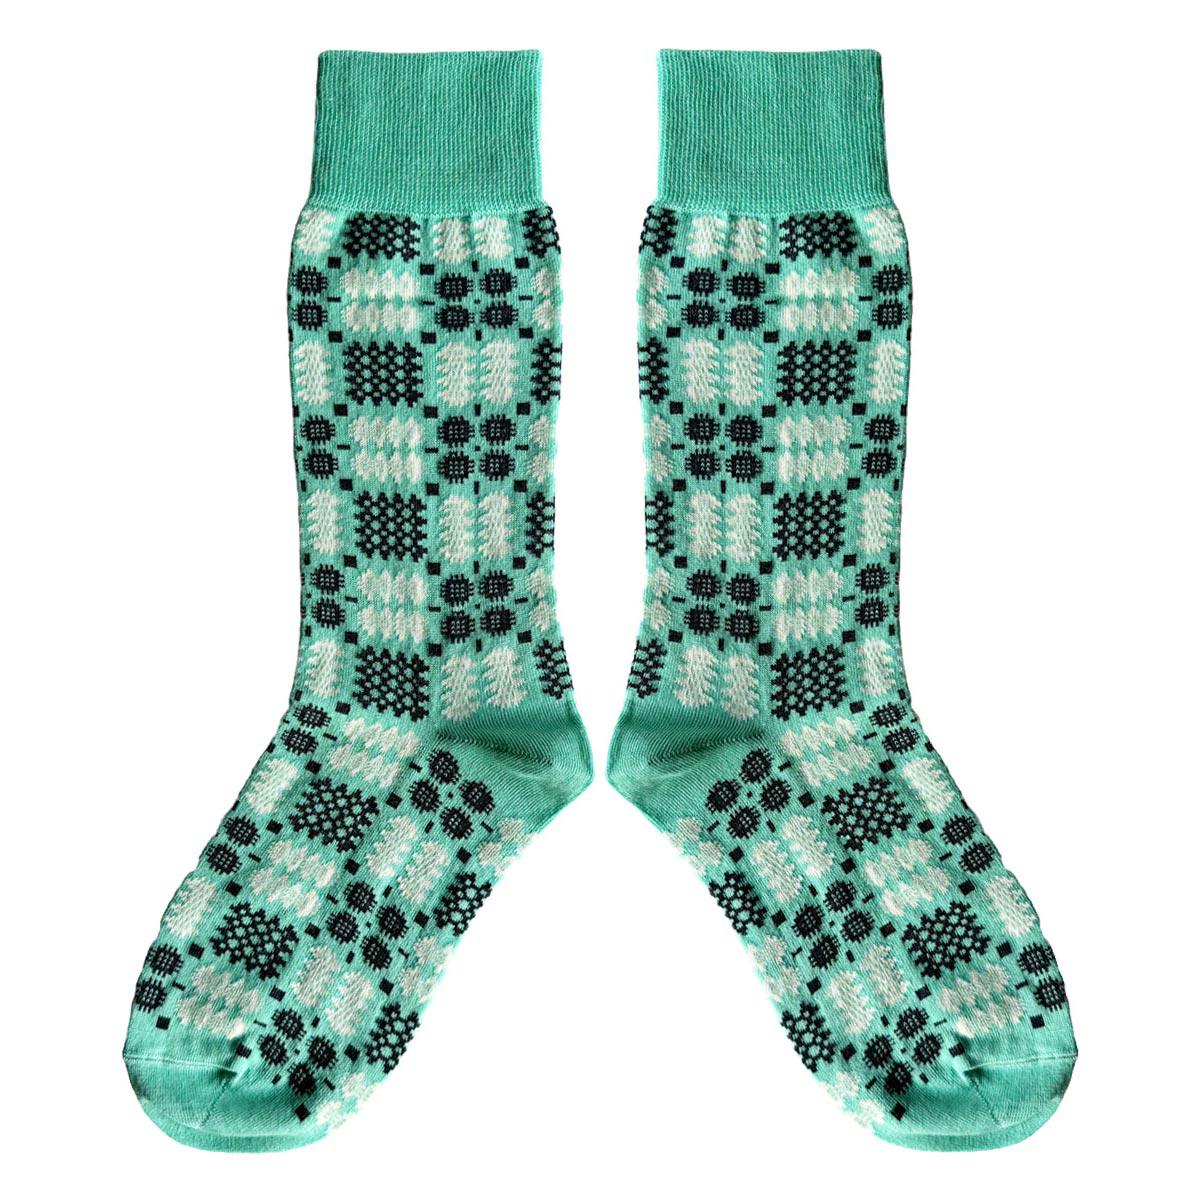 Socks - Mabli Carthen / Welsh Tapestry - Adults Unisex - Turquoise